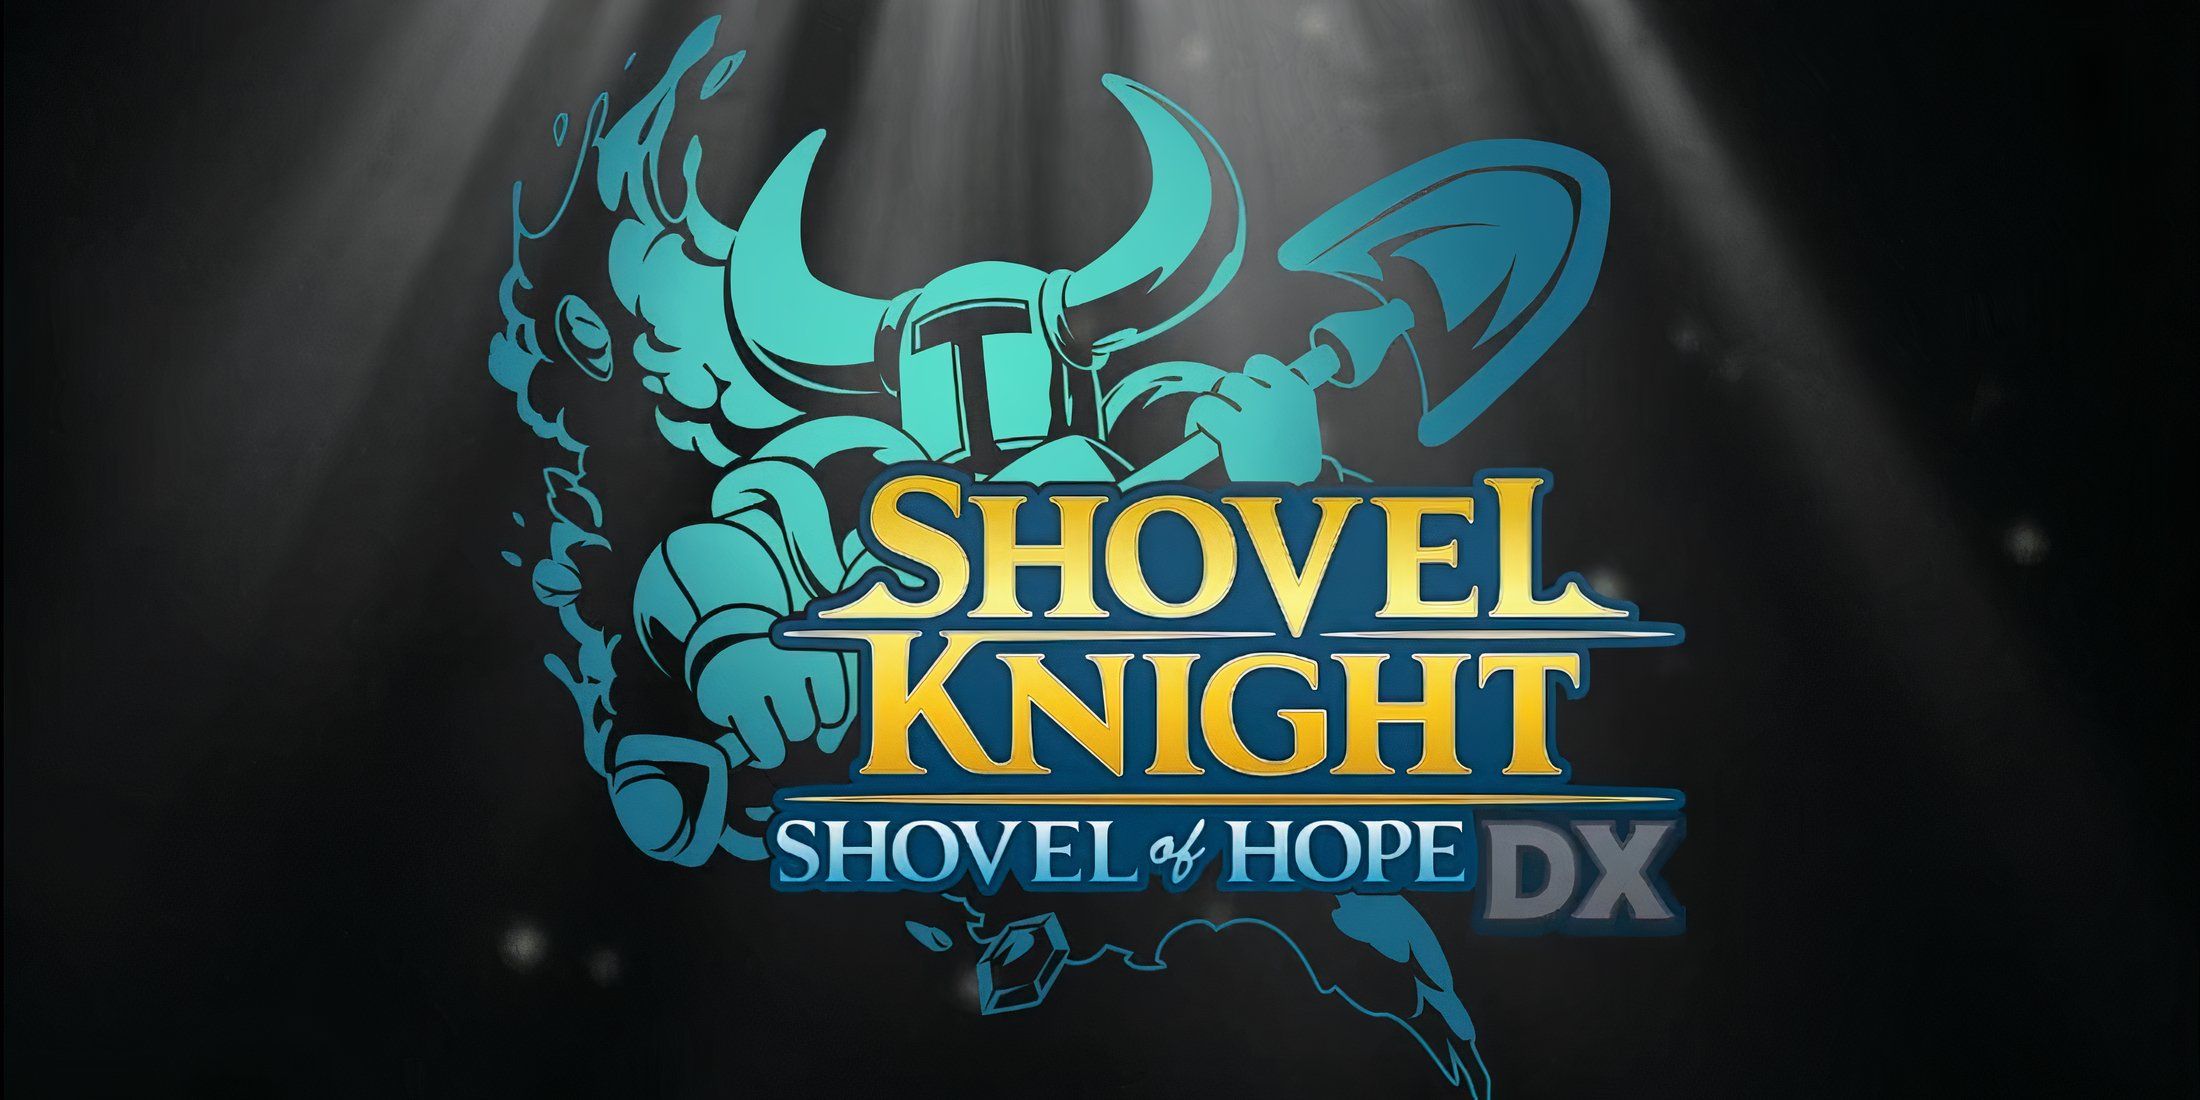 Shovel Knight Shovel of Hope DX thumb